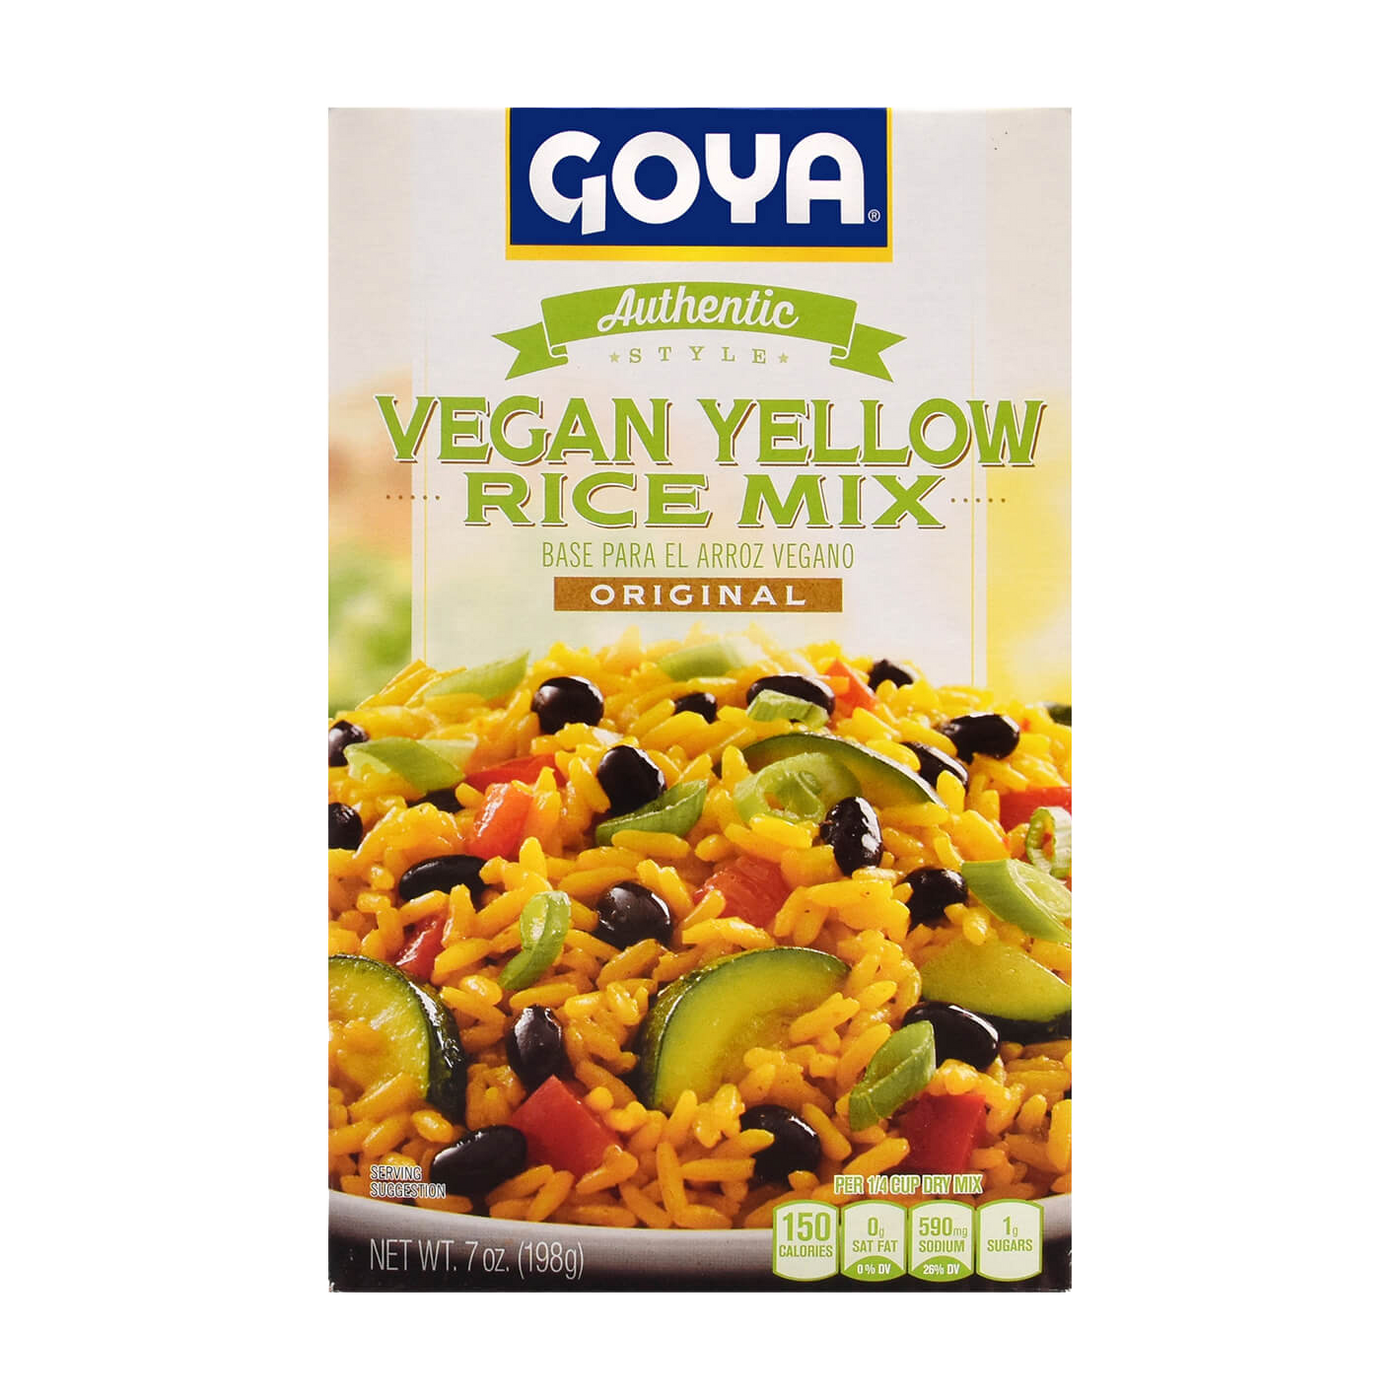   Goya Yellow Rice Vegan Mix